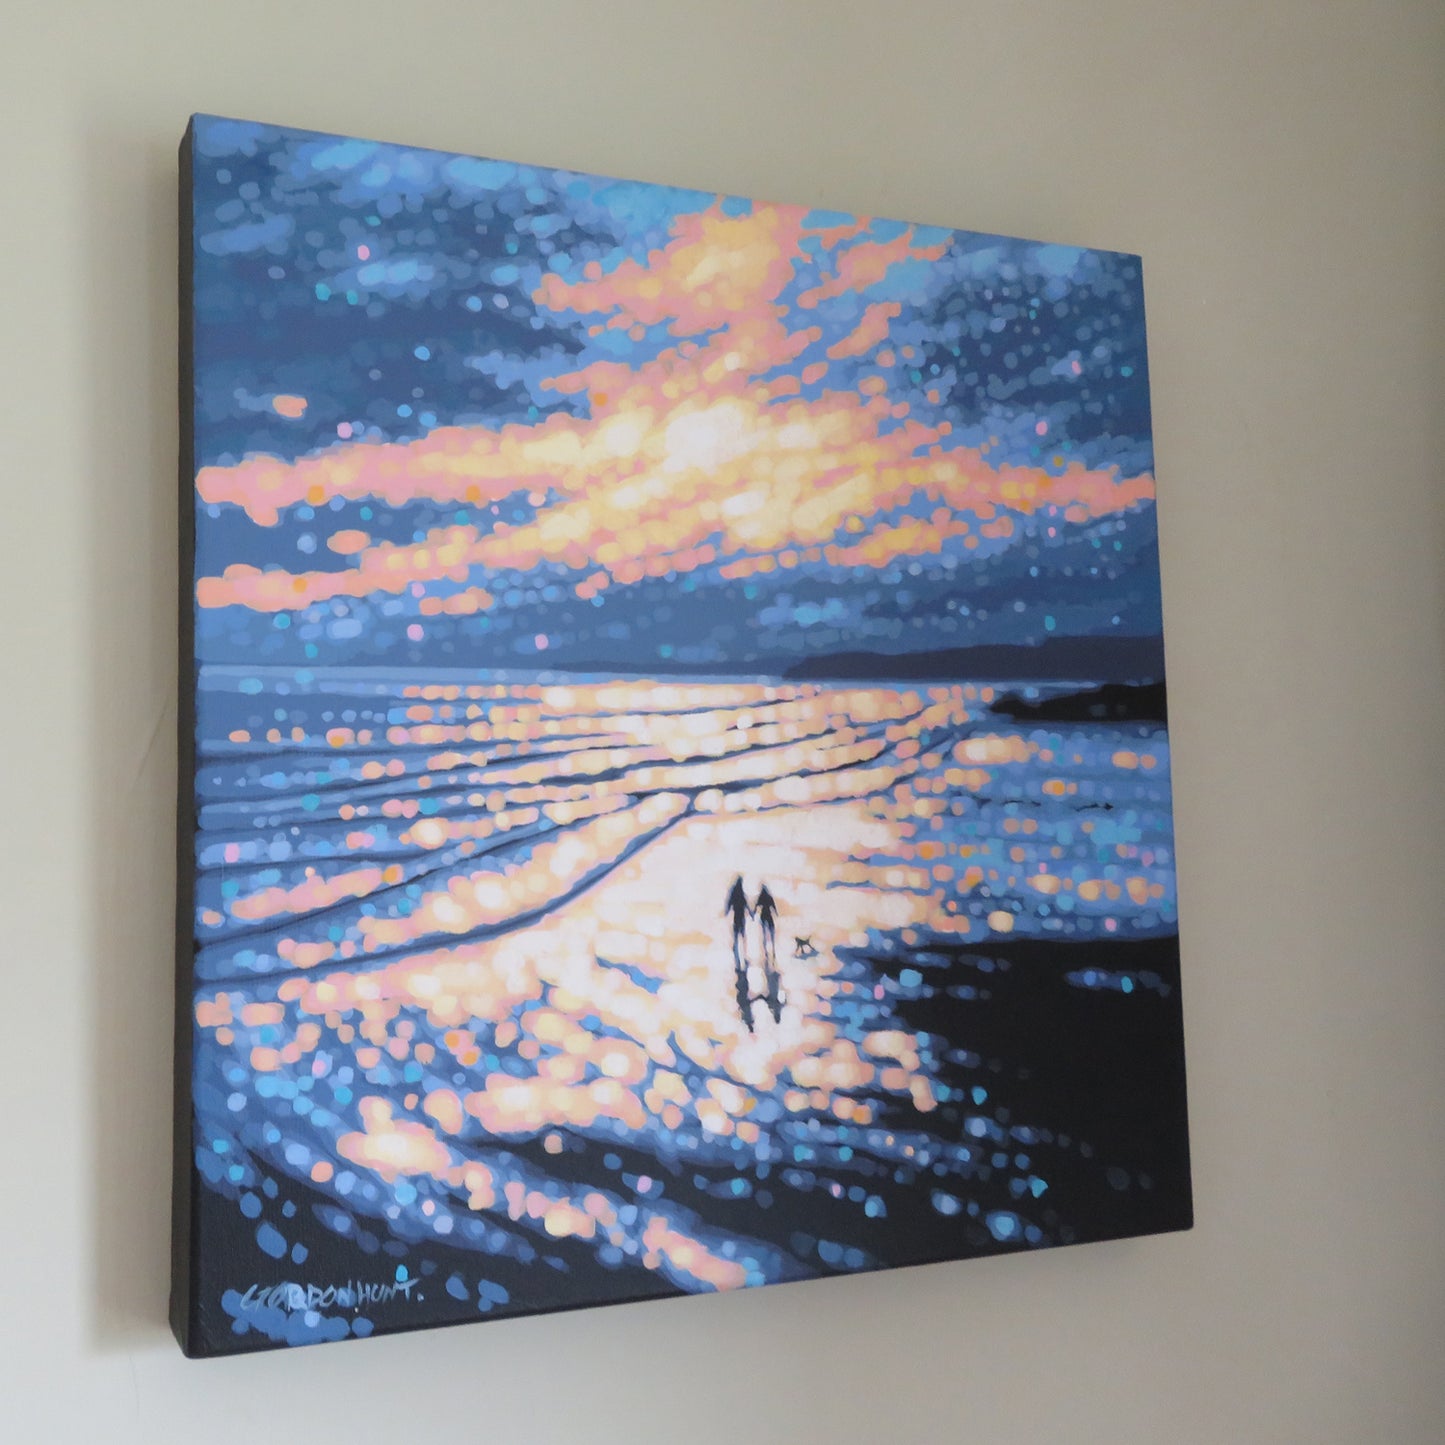 SA006. Sunset beach walk - Original painting